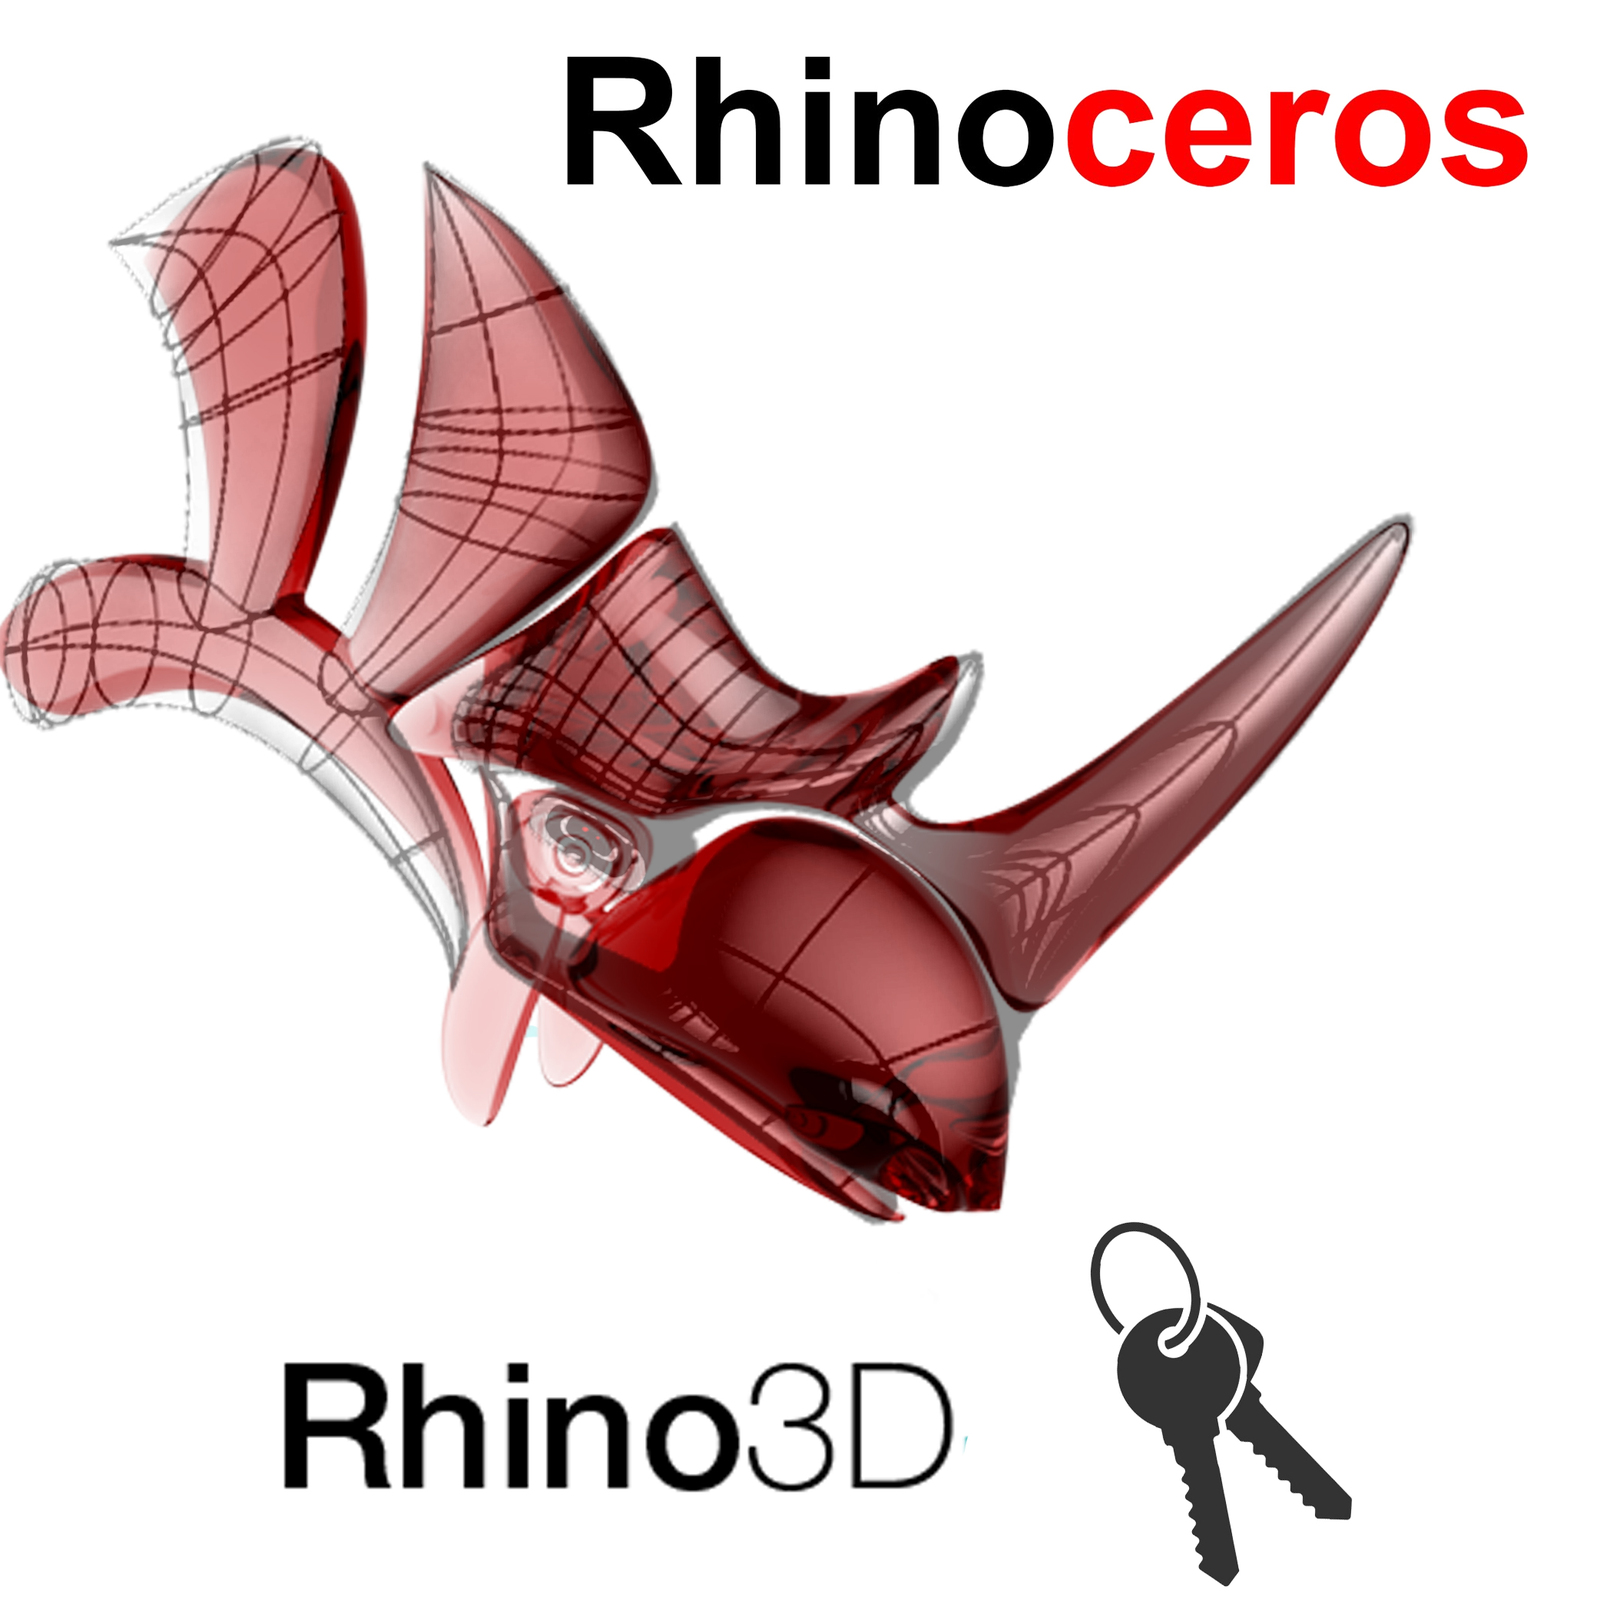 rhino 3d 7